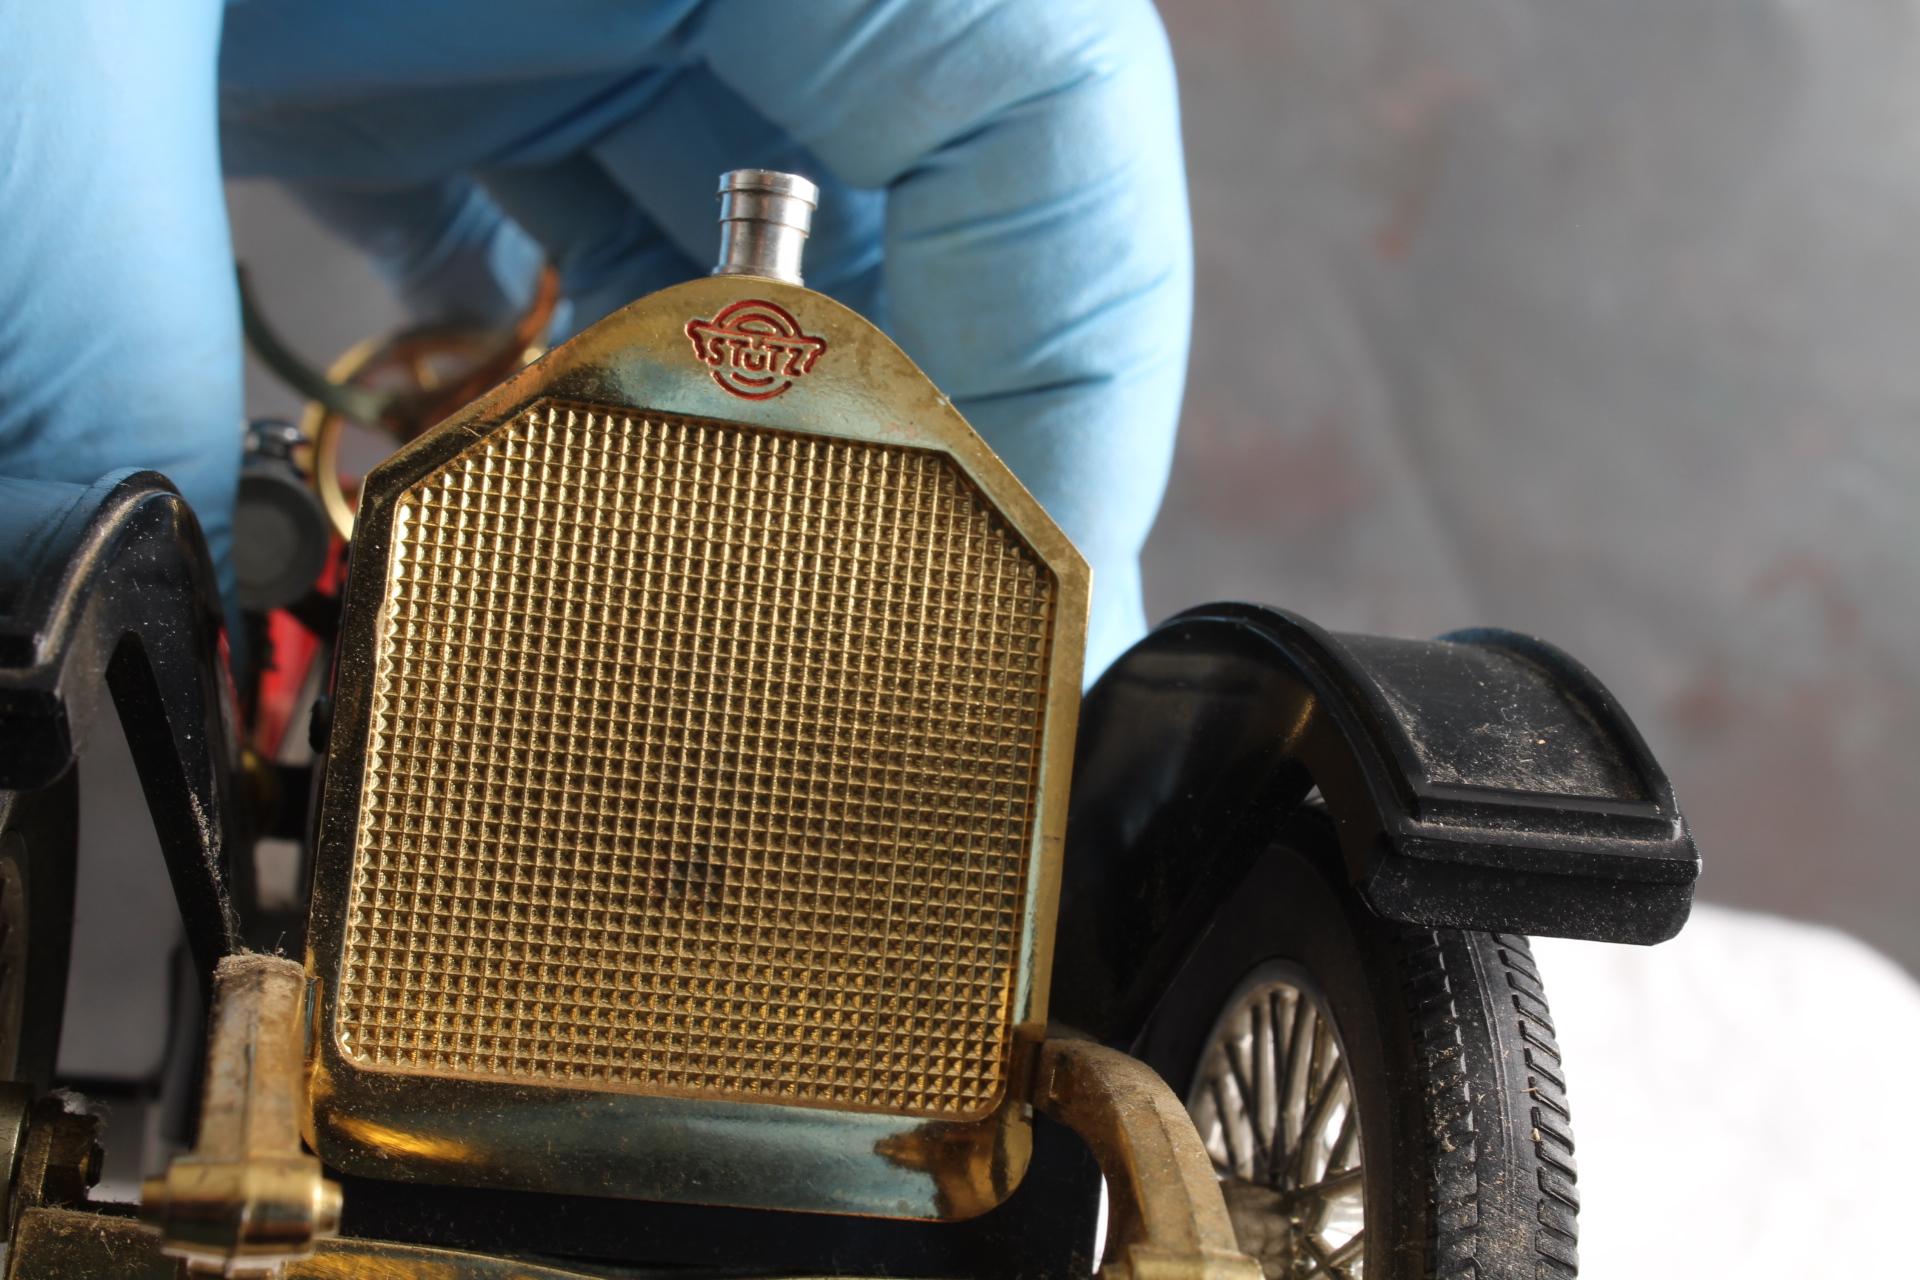 1913 Stutz Bearcat Model Car AM Radio 5 Transistor Battery Operated Working